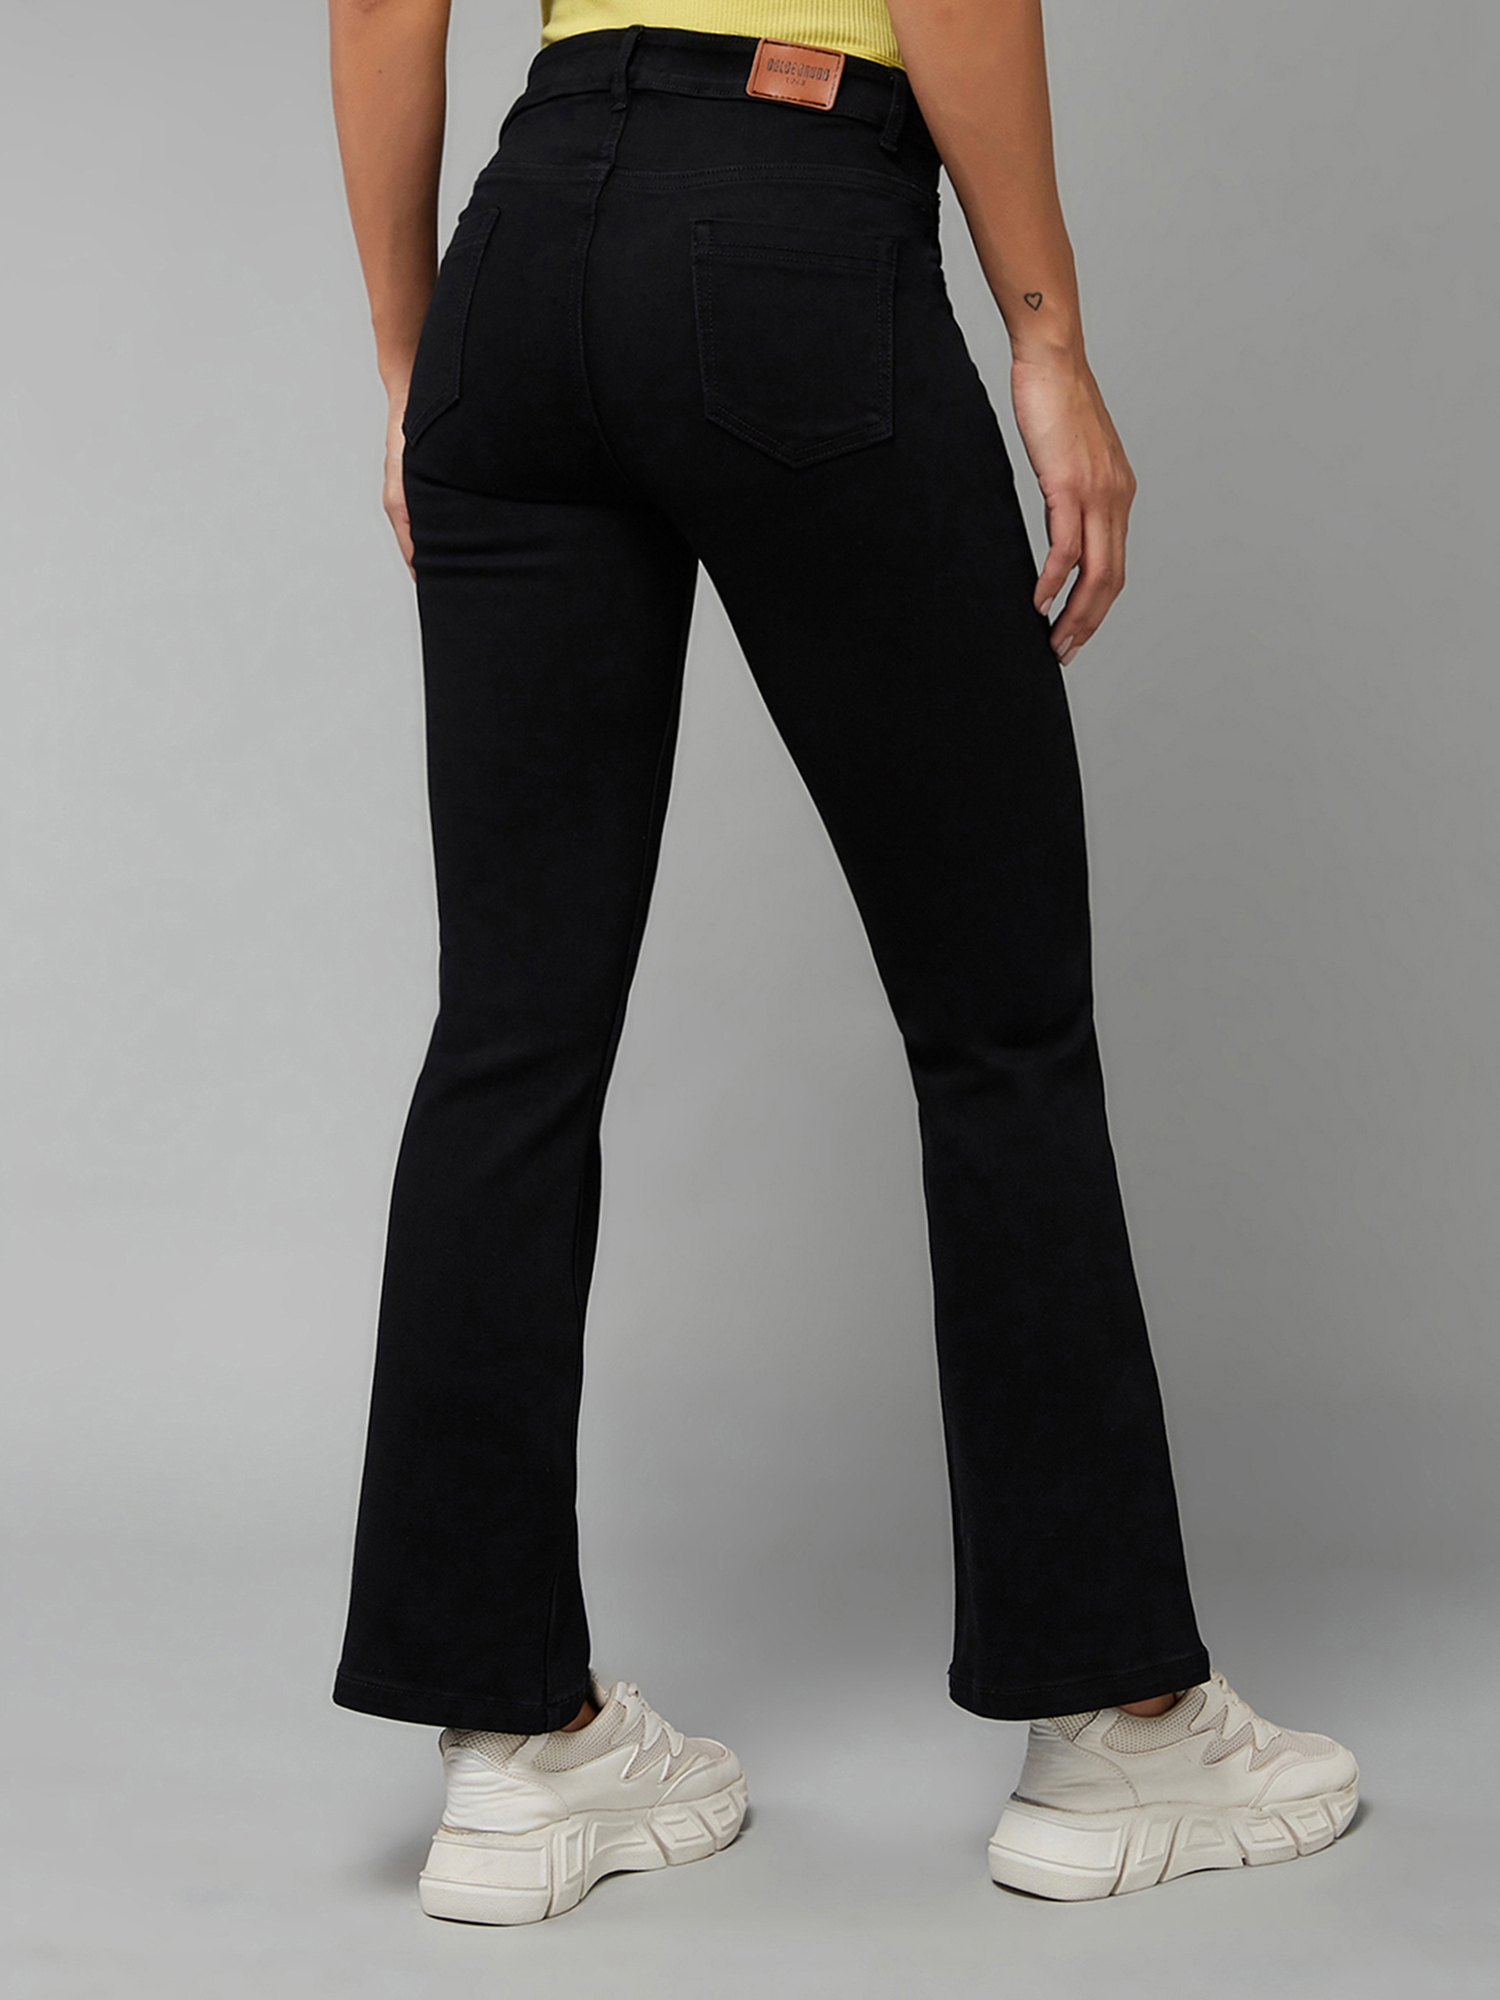 Women's Black Wide-Leg High rise Clean look Regular Stretchable Denim Jeans